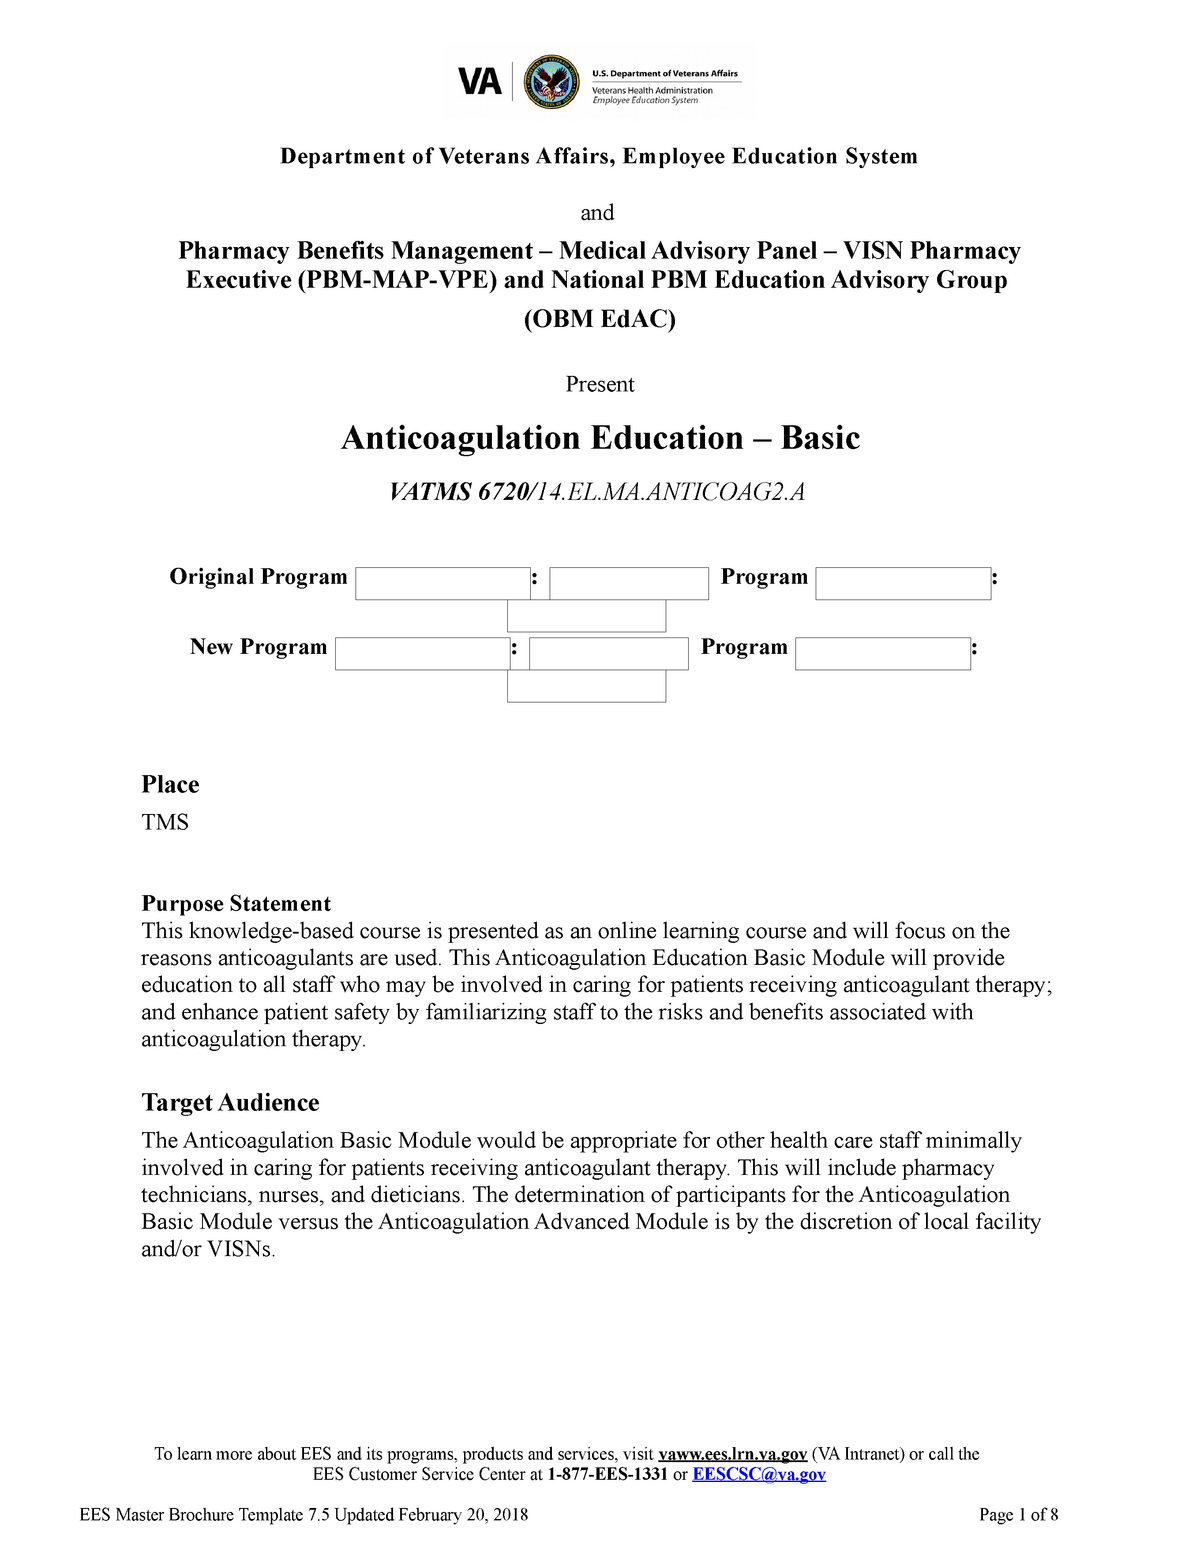 Anticoagulation Education Basic Module DTG 2018 0323 Department of